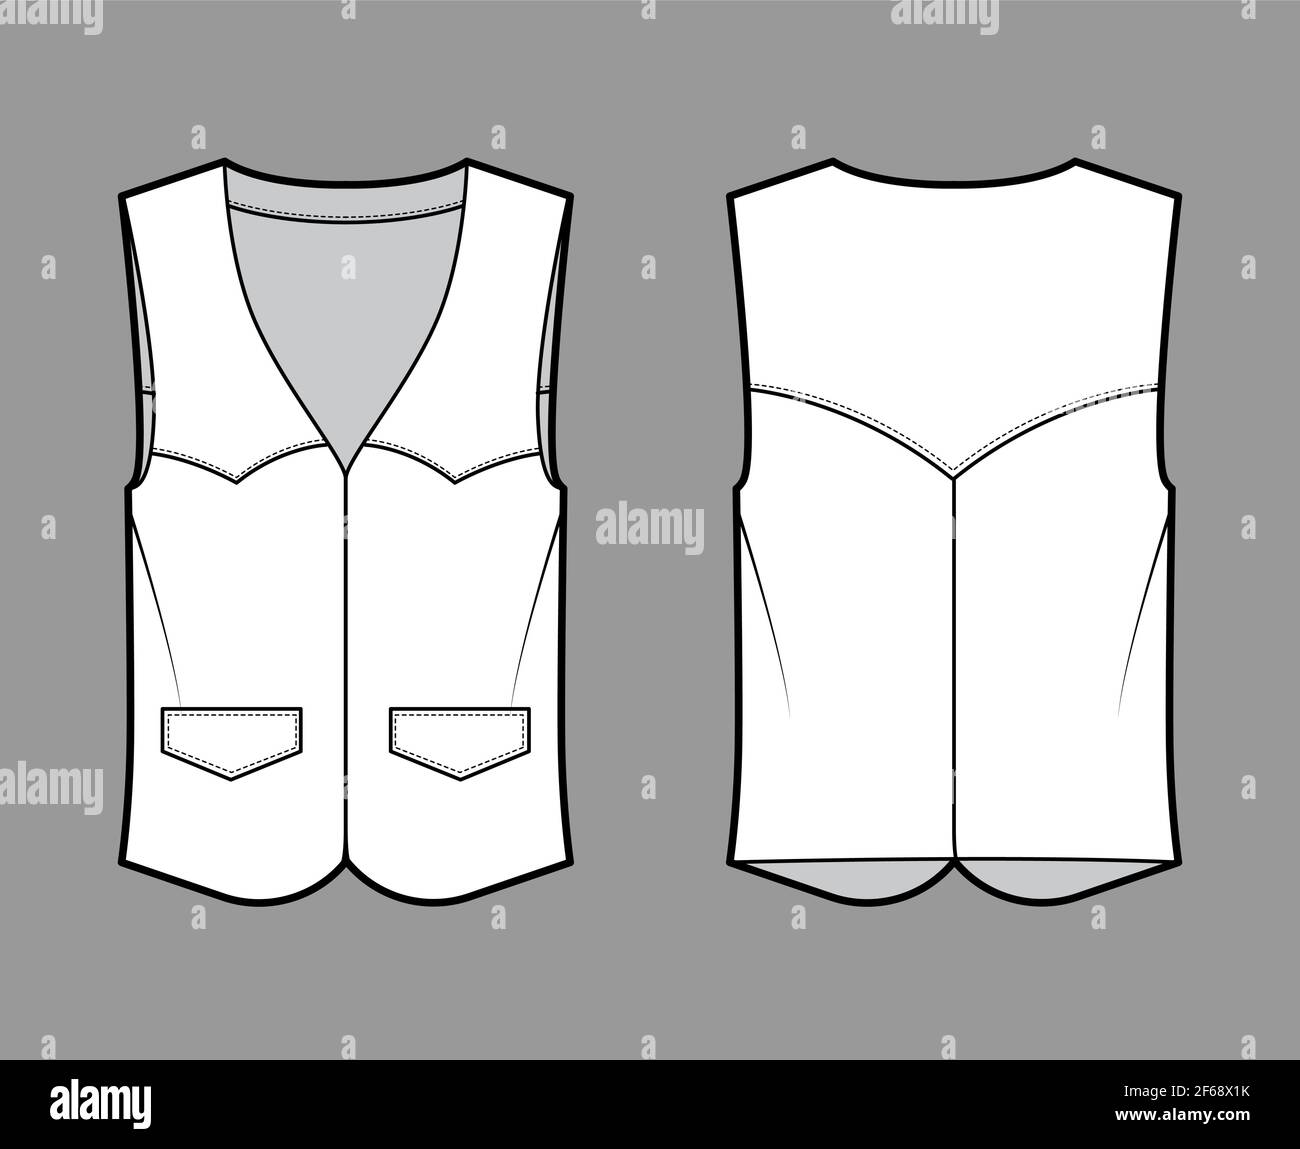 Western vest waistcoat technical fashion illustration with sleeveless ...